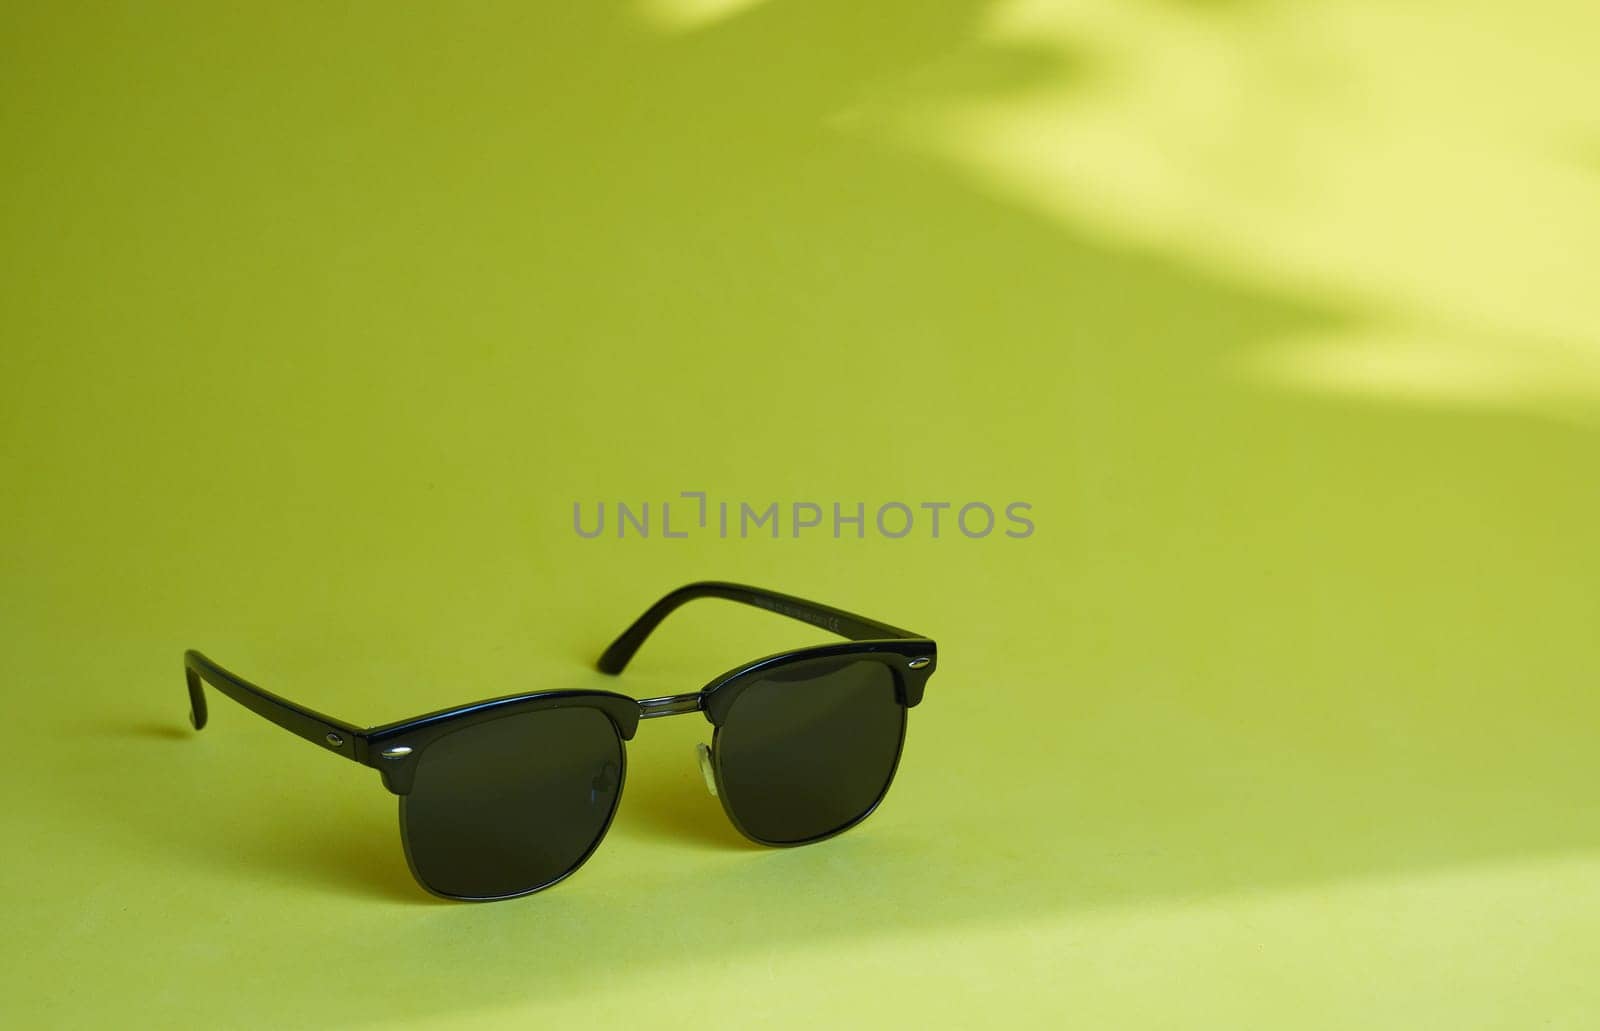 black sunglasses on a light green background by Севостьянов